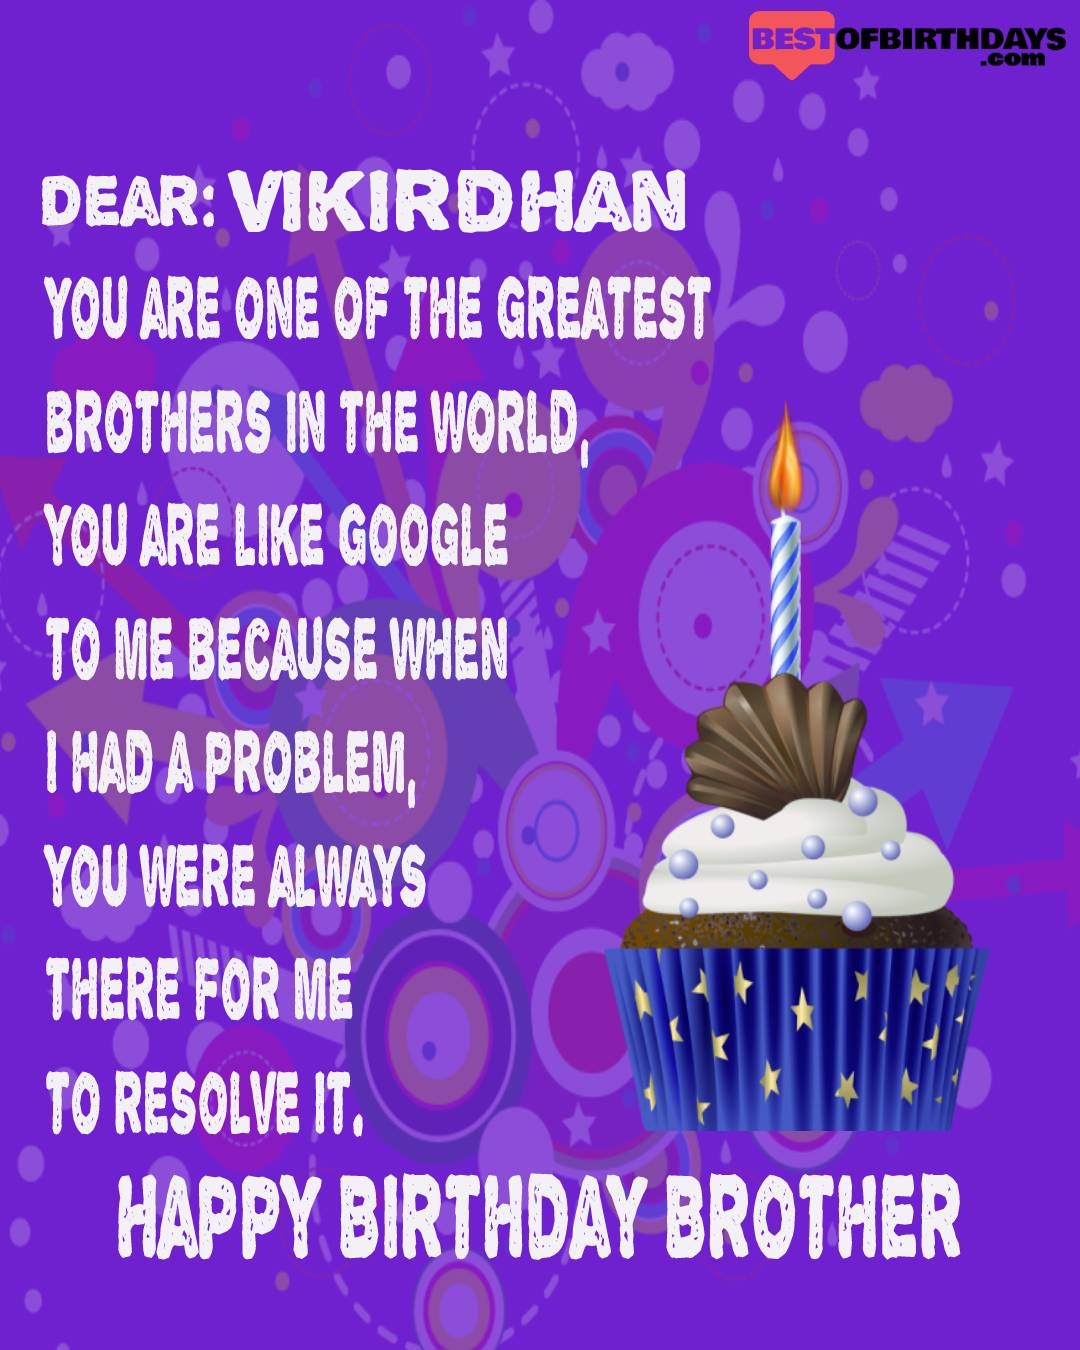 Happy birthday vikirdhan bhai brother bro